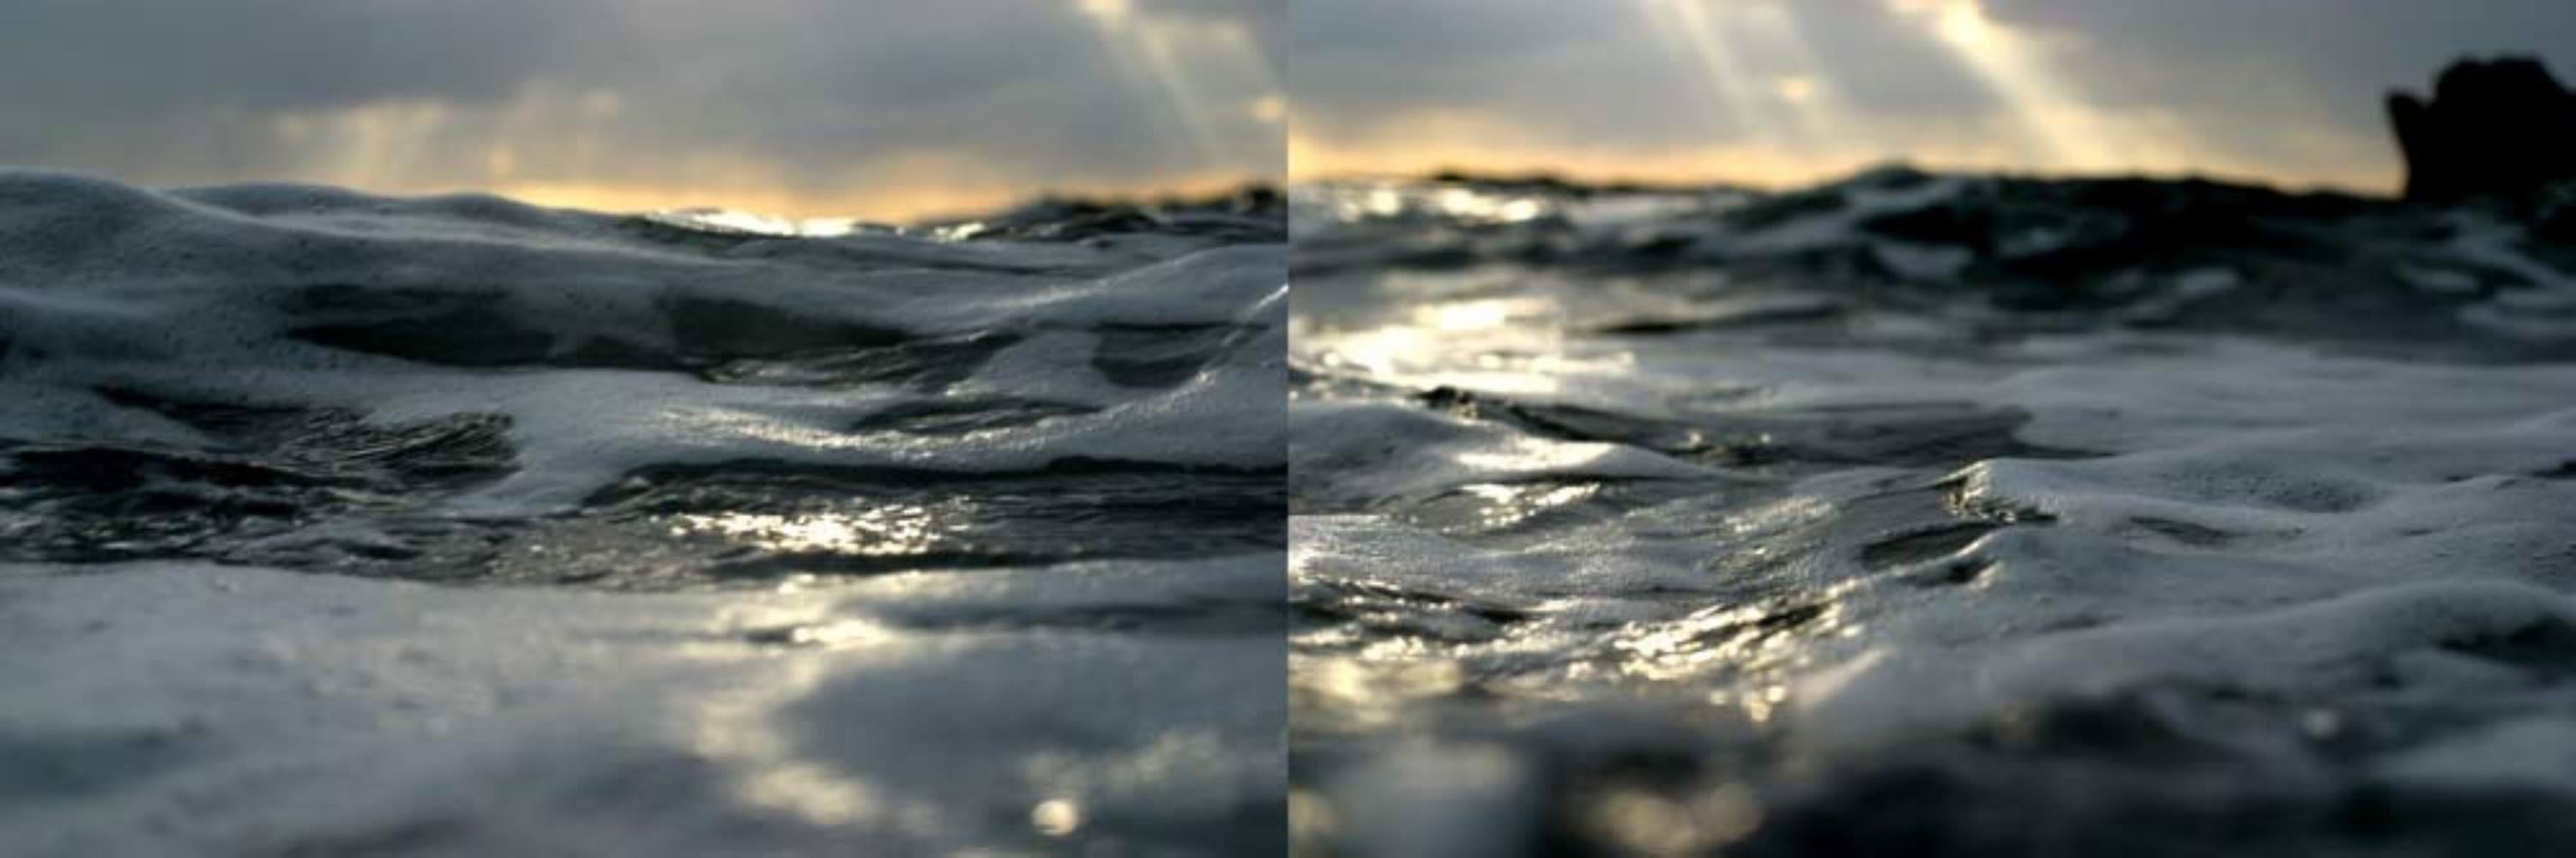 NAMI_029-030 – Syoin Kajii, Japanese Photography, Ocean, Waves, Water, Nature